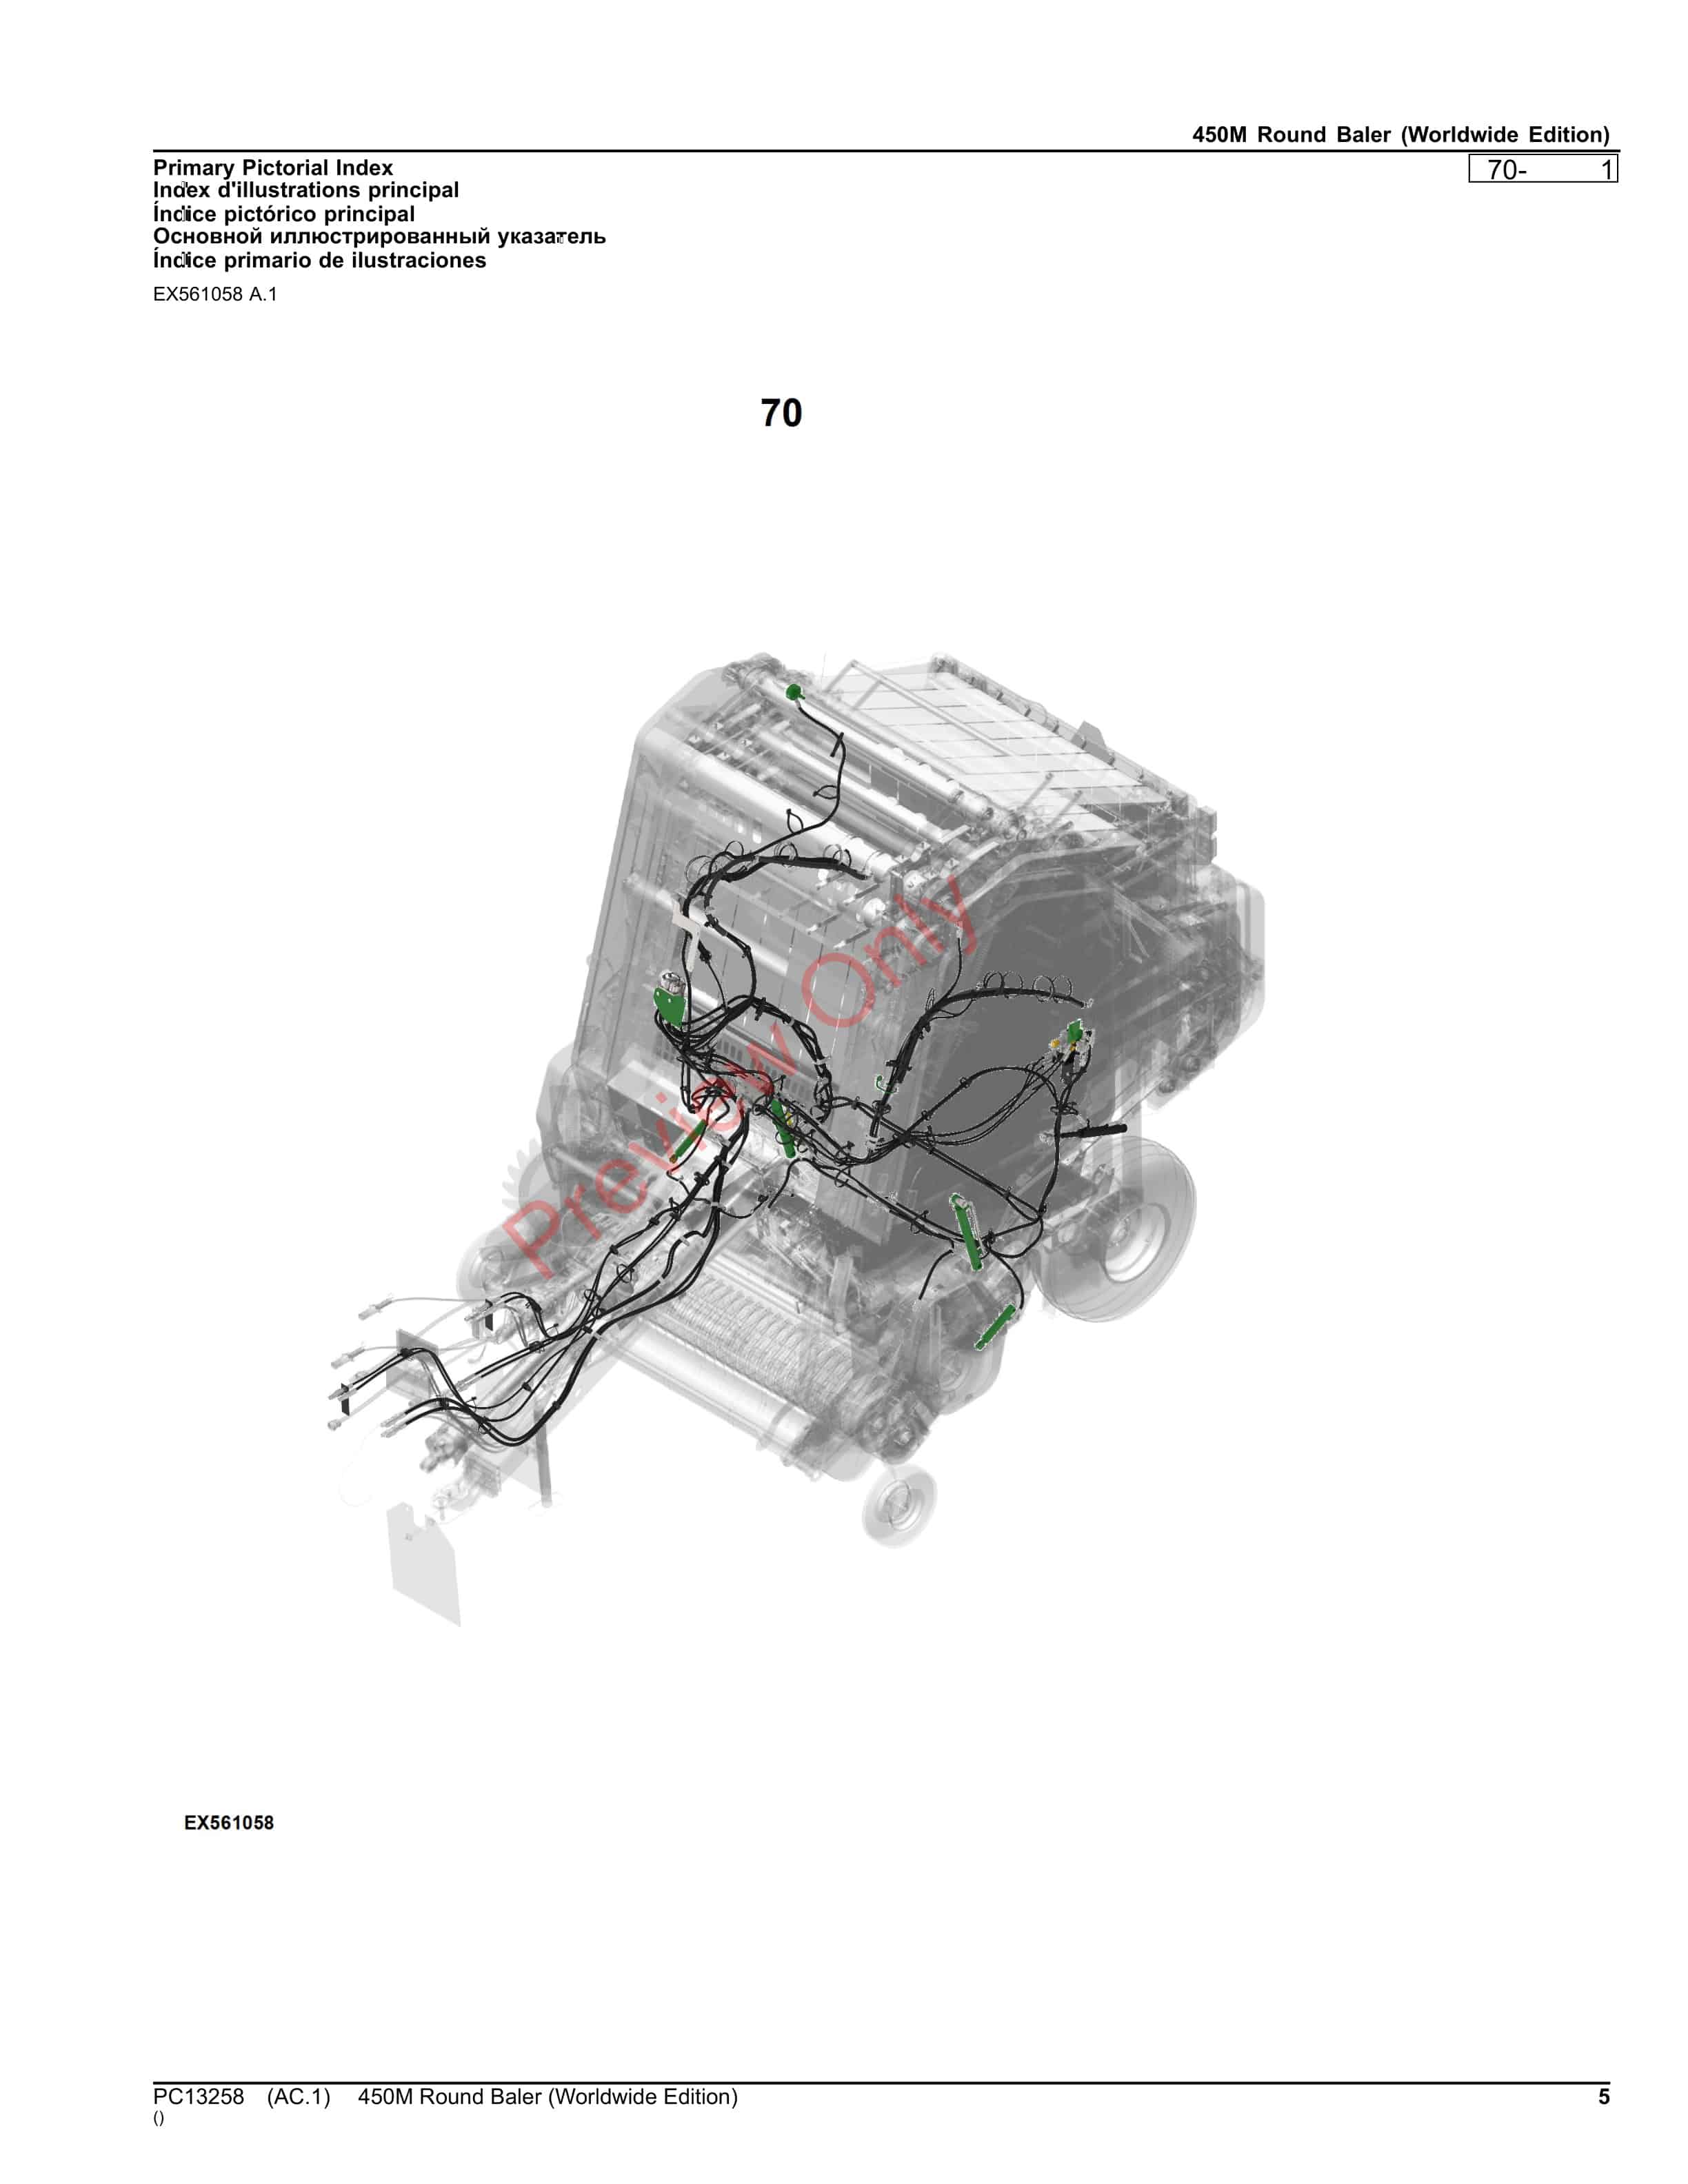 John Deere 450M Round Baler Parts Catalog PC13258 22OCT23-5